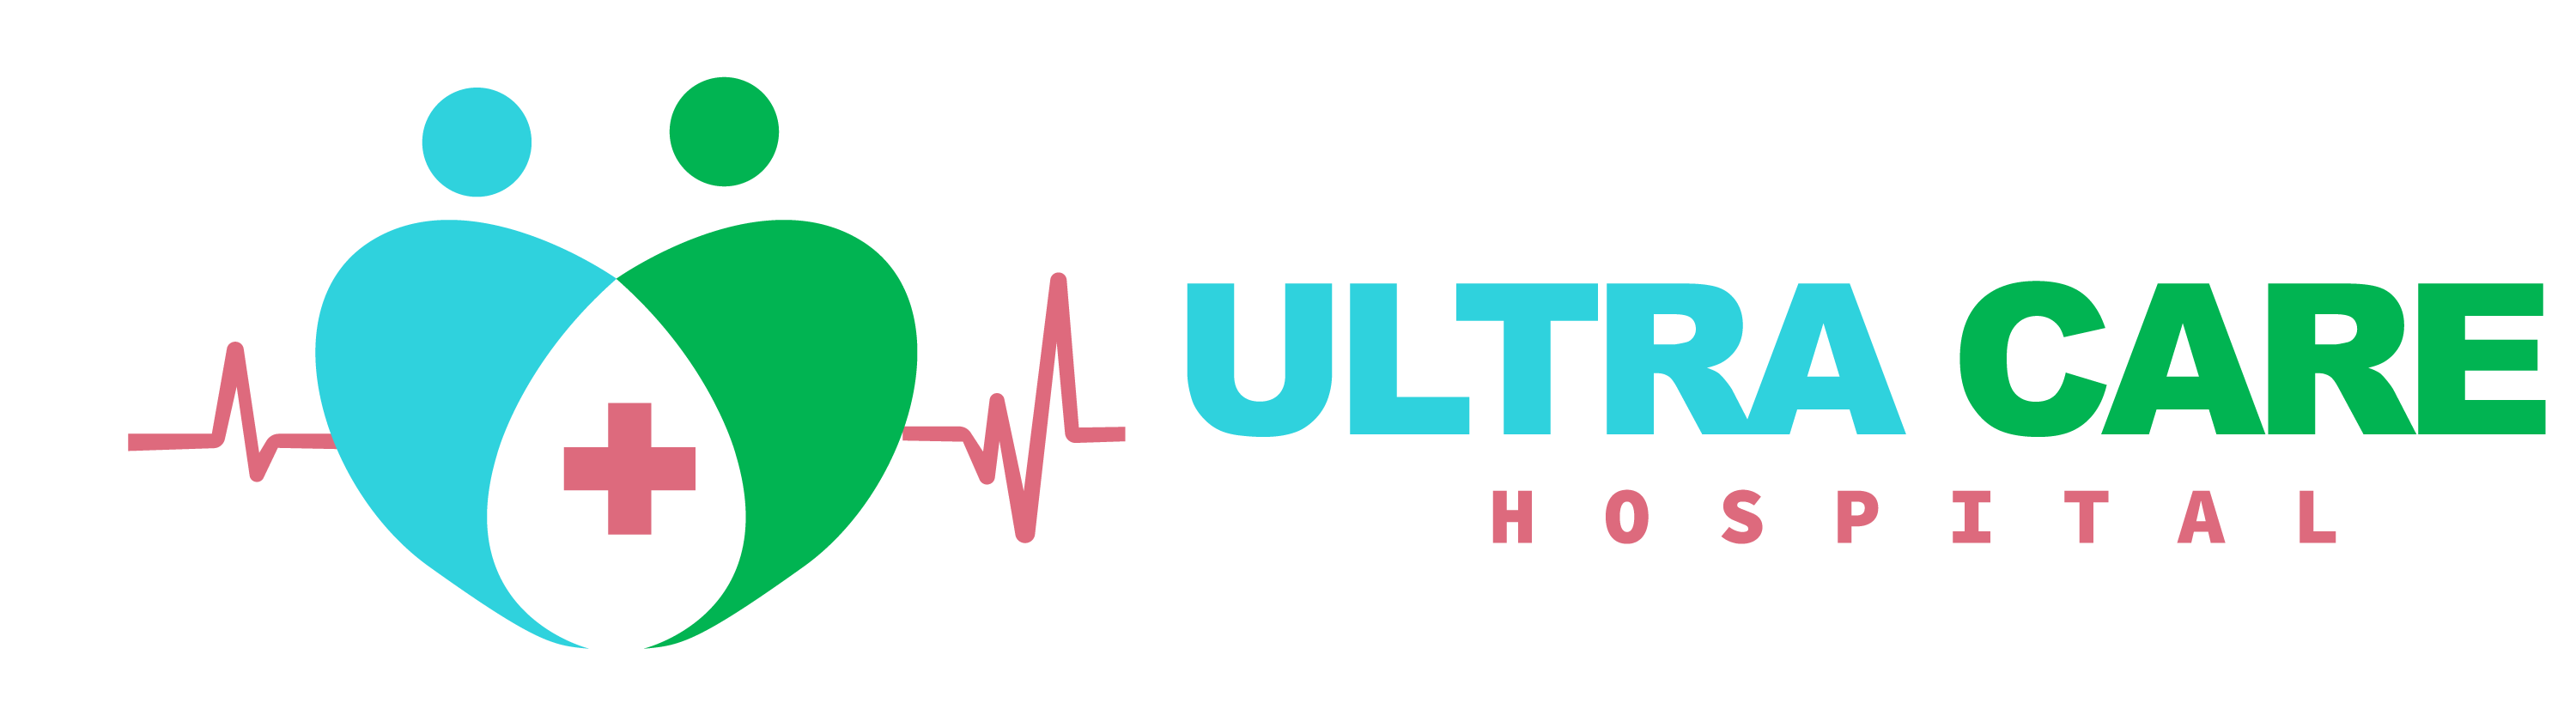 ULTRA CARE HOSPITAL